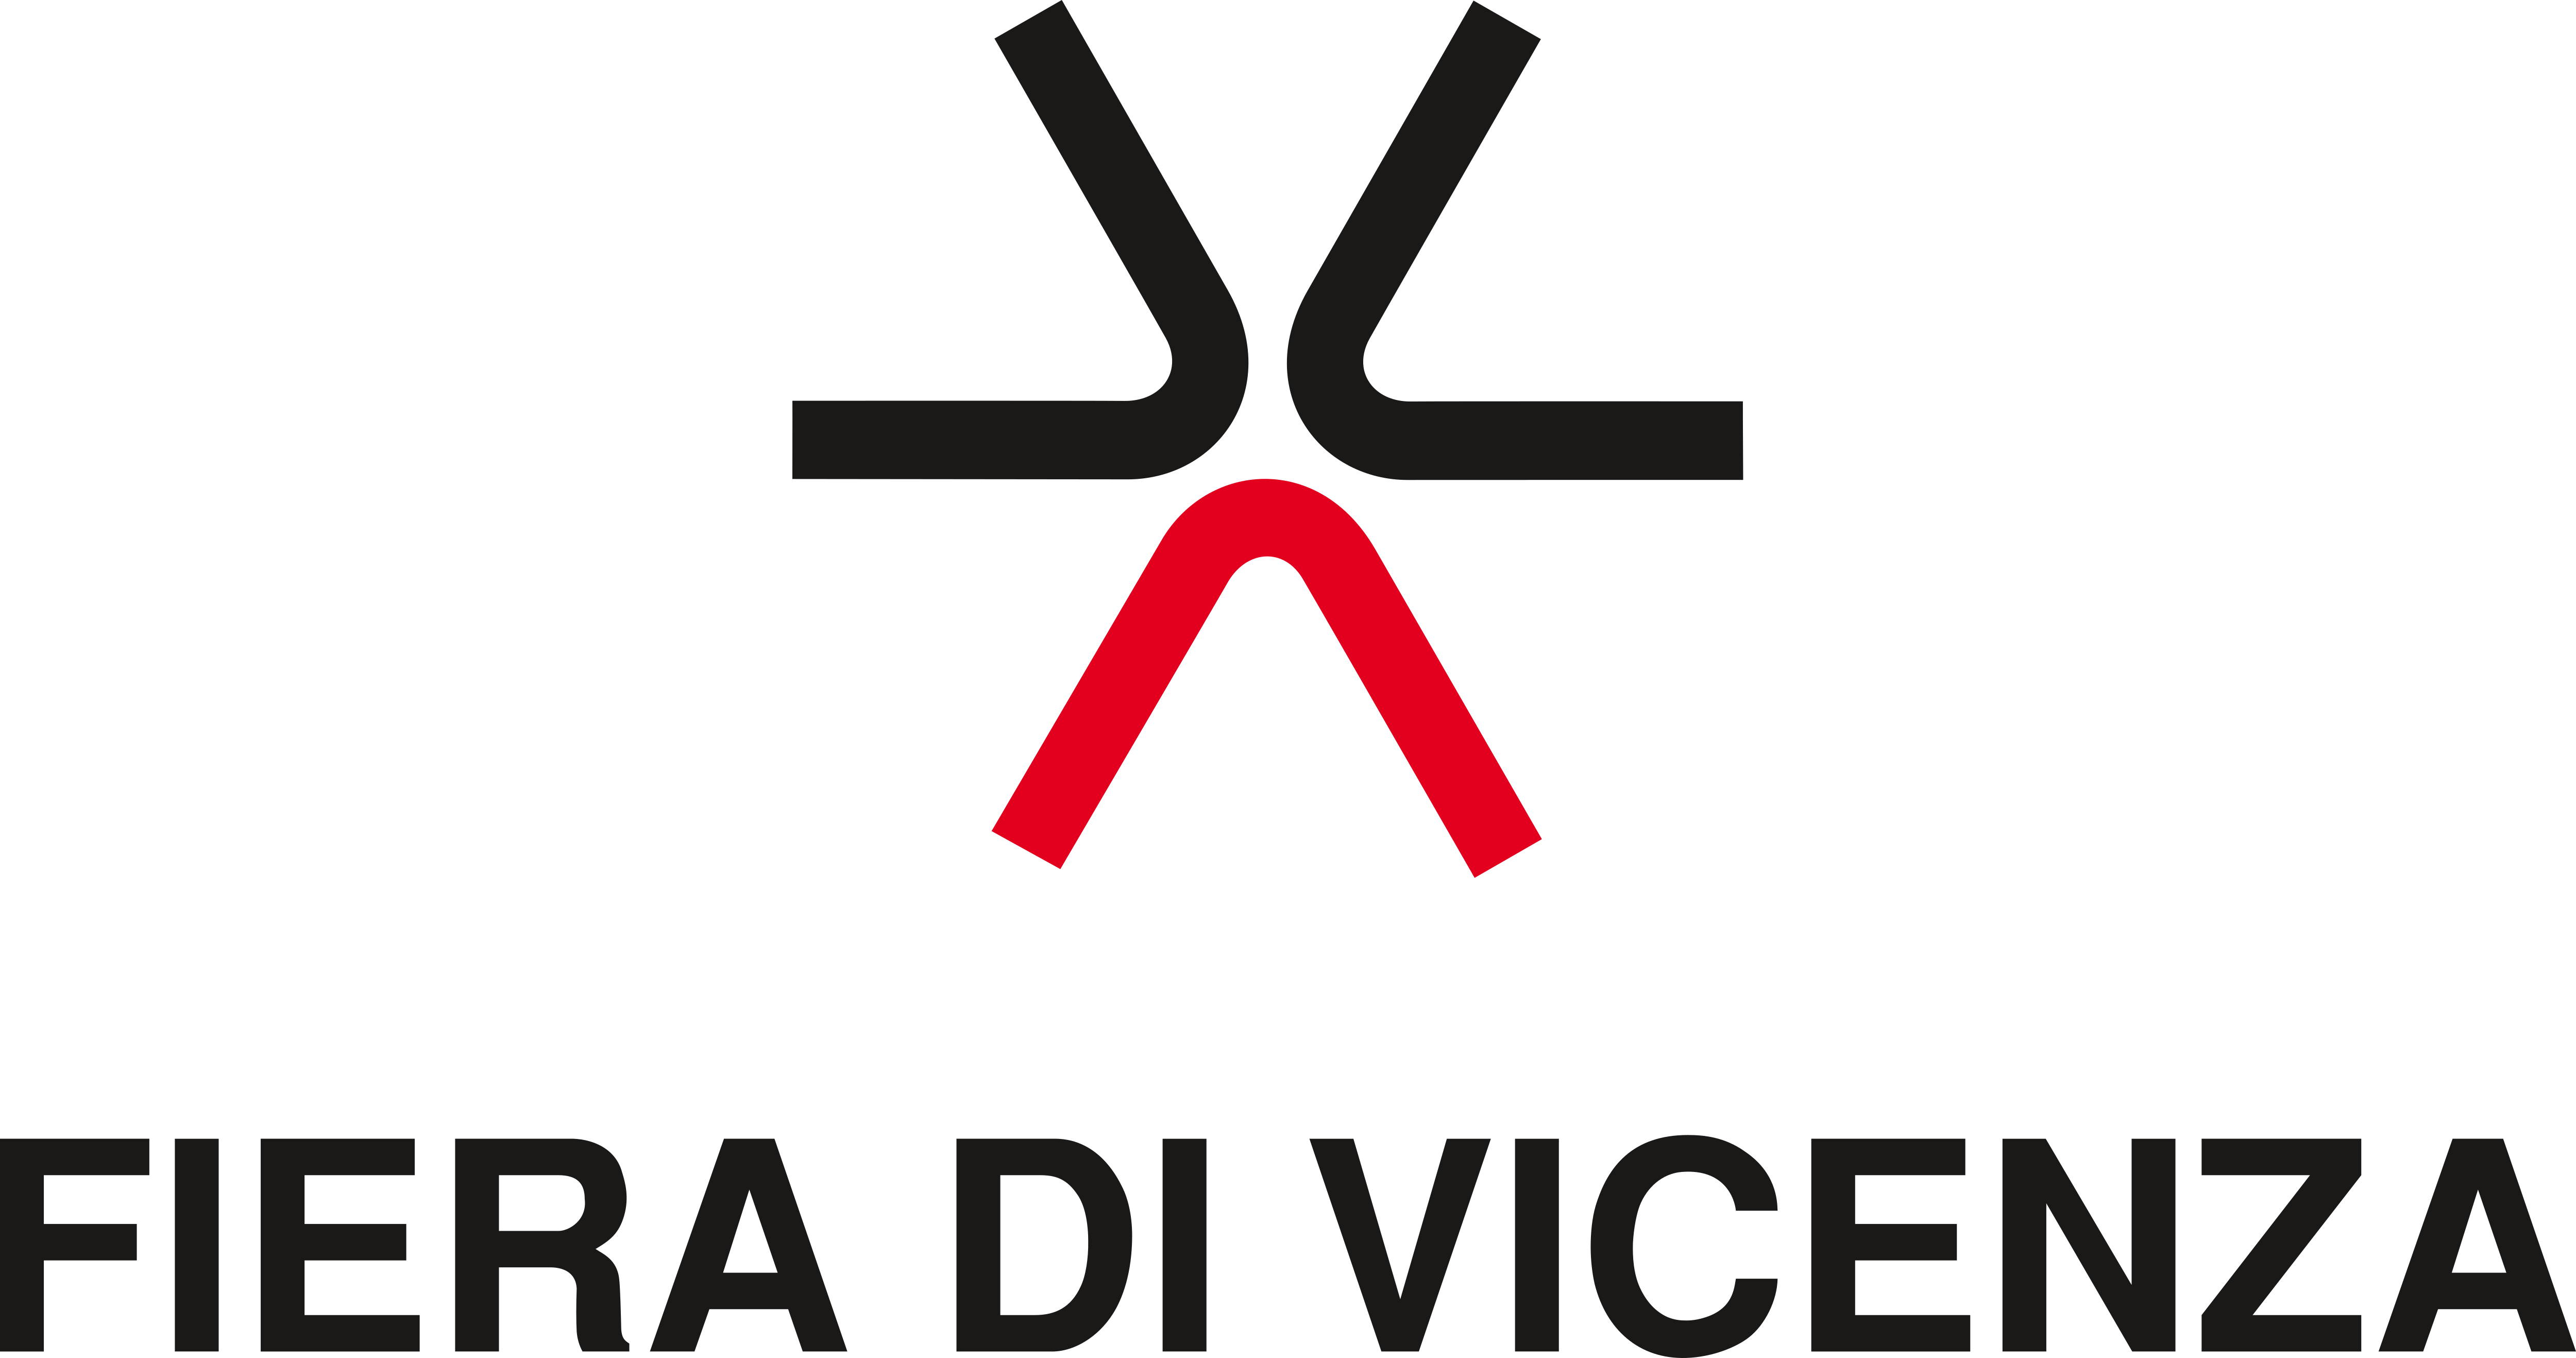 Vicenza Logo - Fiera di Vicenza – Logos Download